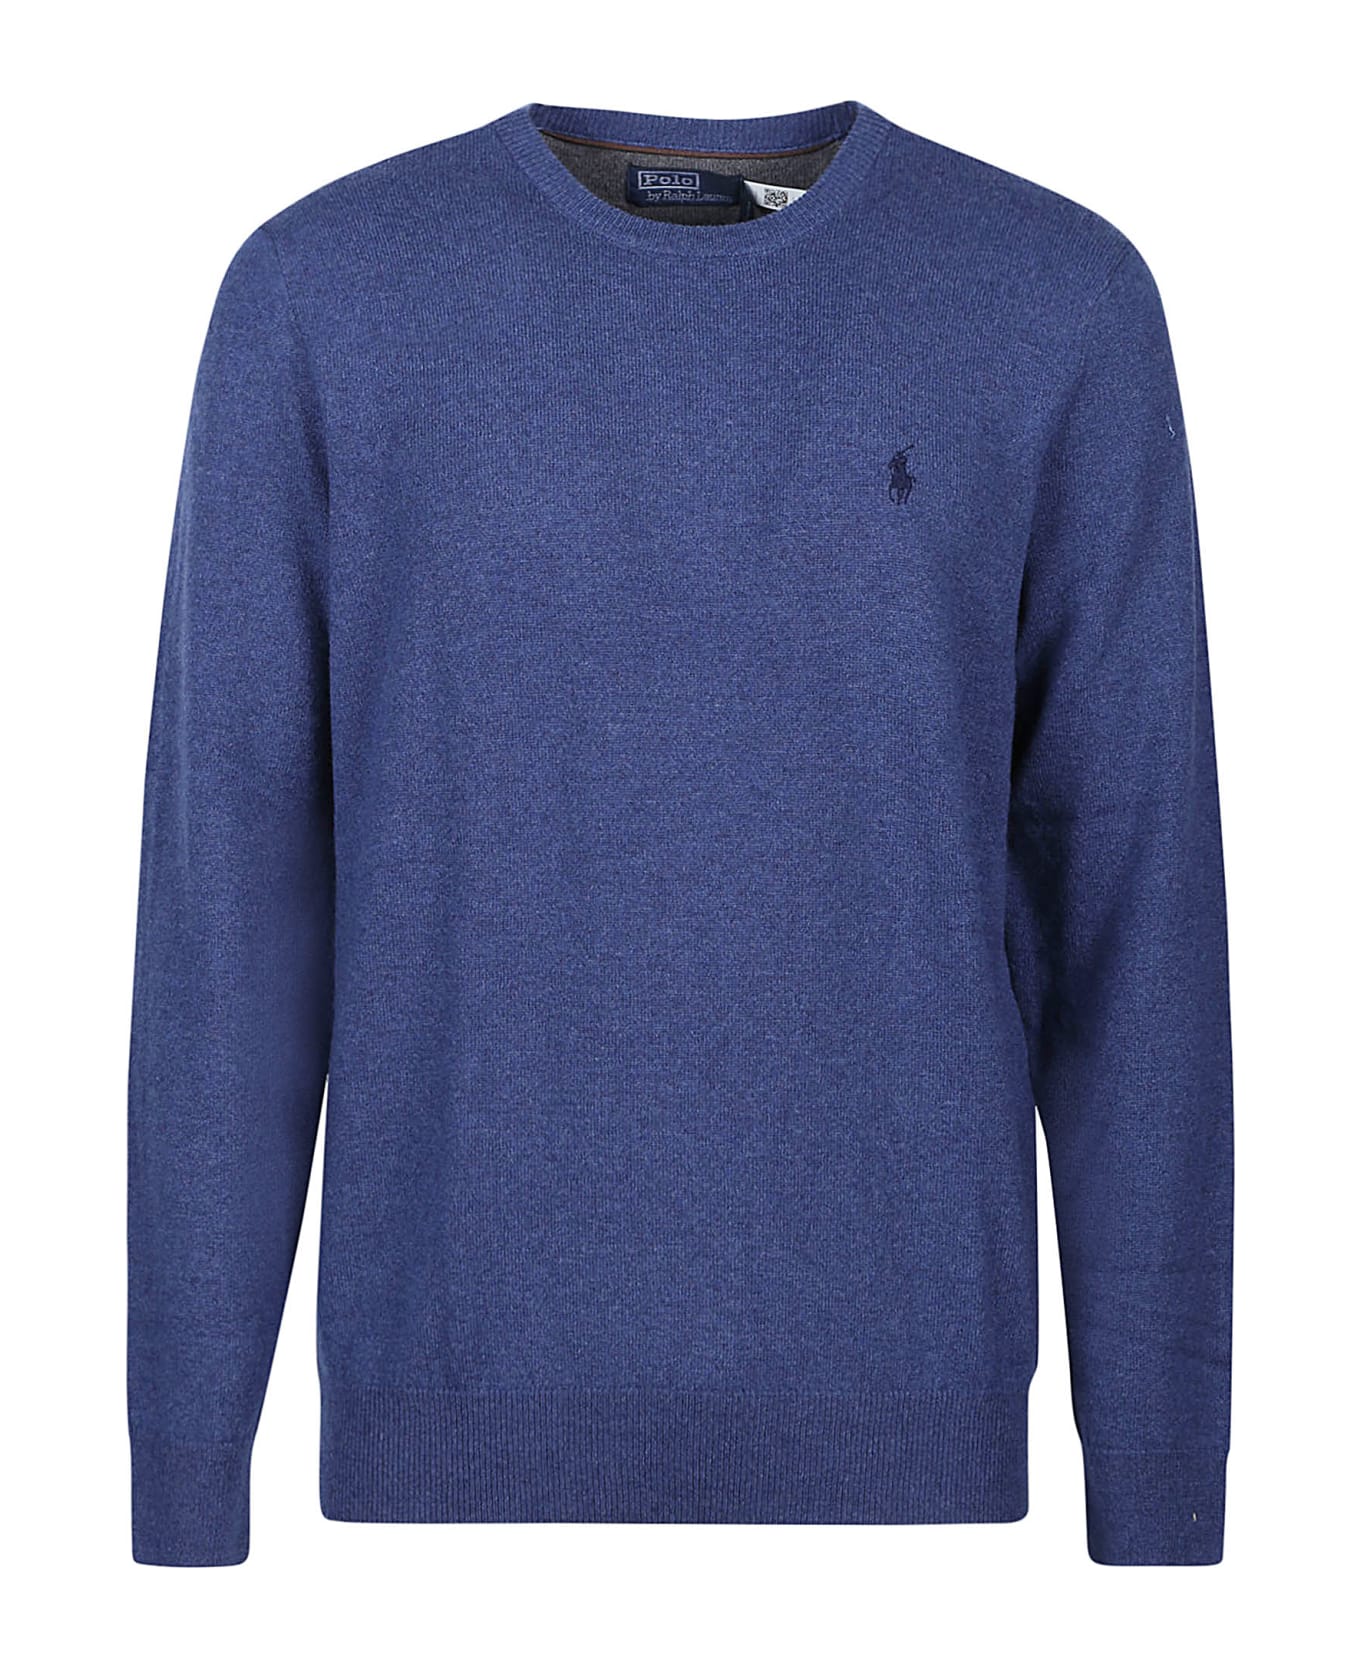 Polo Ralph Lauren Long Sleeve Sweater - Rustic Navy ニットウェア